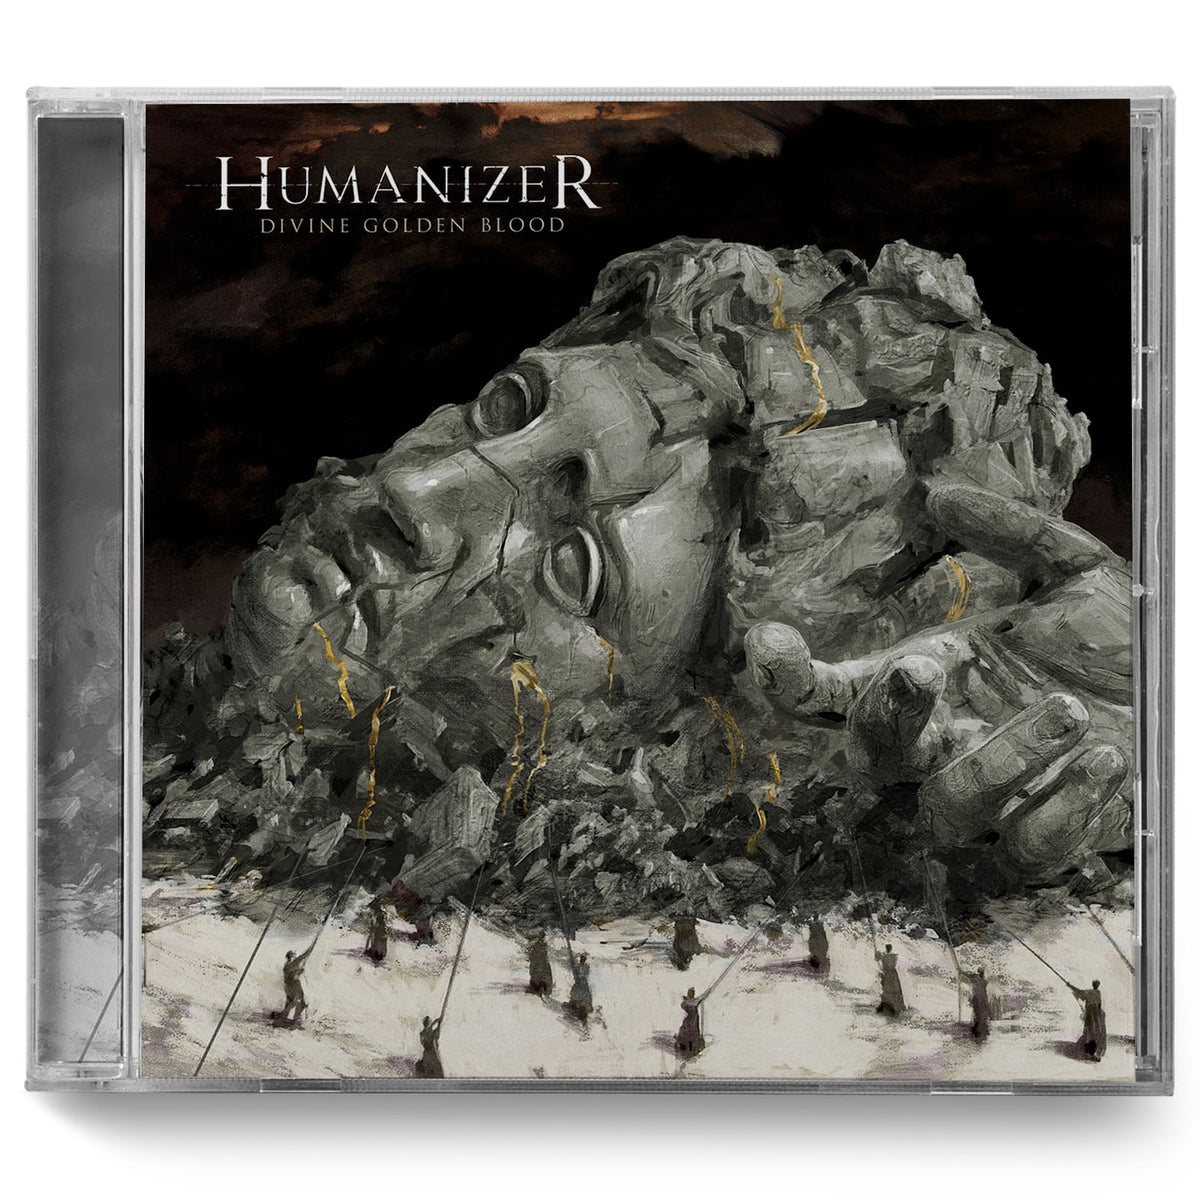 Humanizer "Divine Golden Blood" CD - Miasma Records